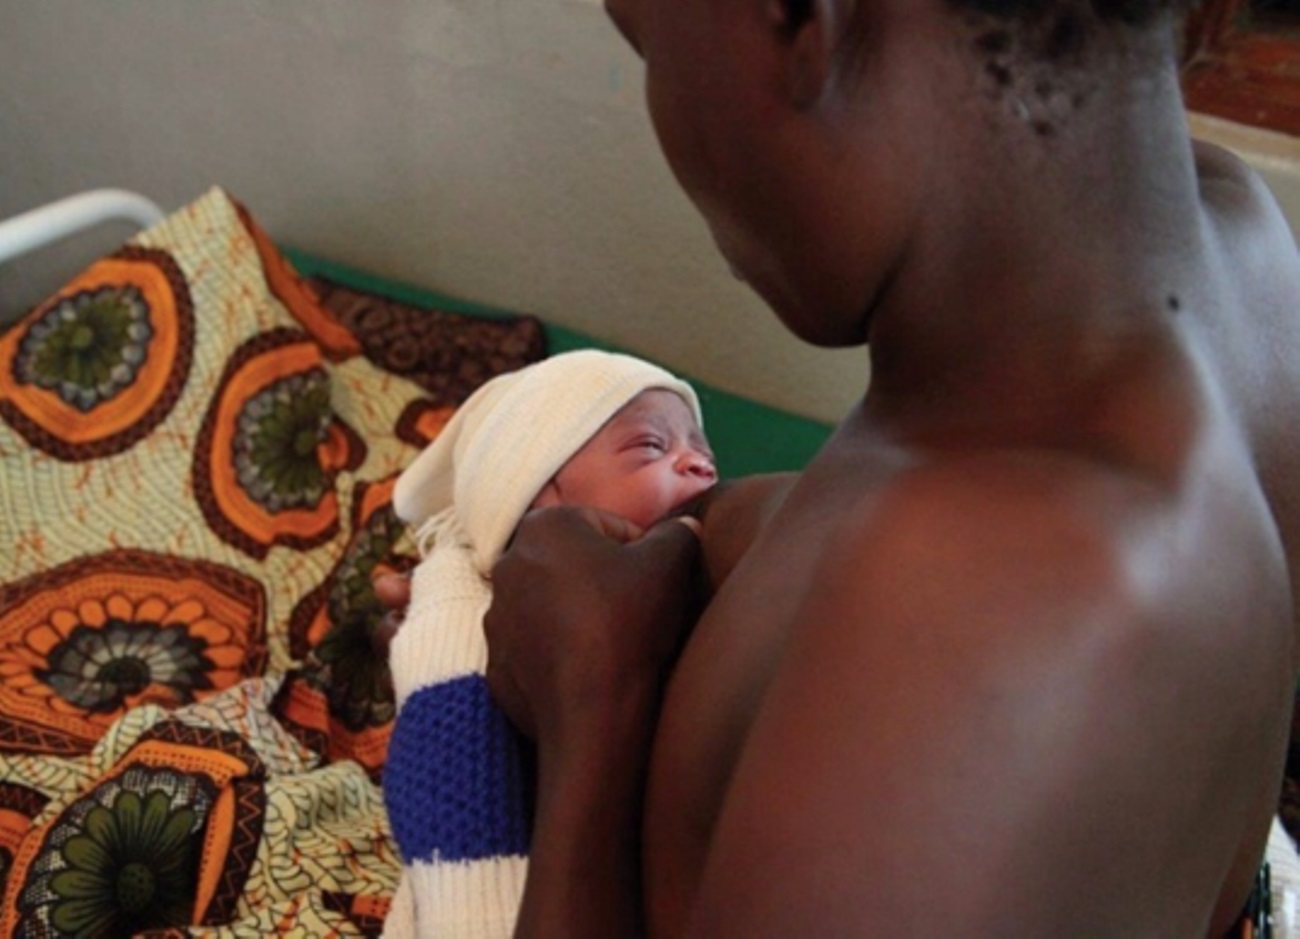 A mother breastfeeds her newborn baby. Photo MNCH. MakSPH, CHS, Makerere University, Kampala Uganda, East Africa